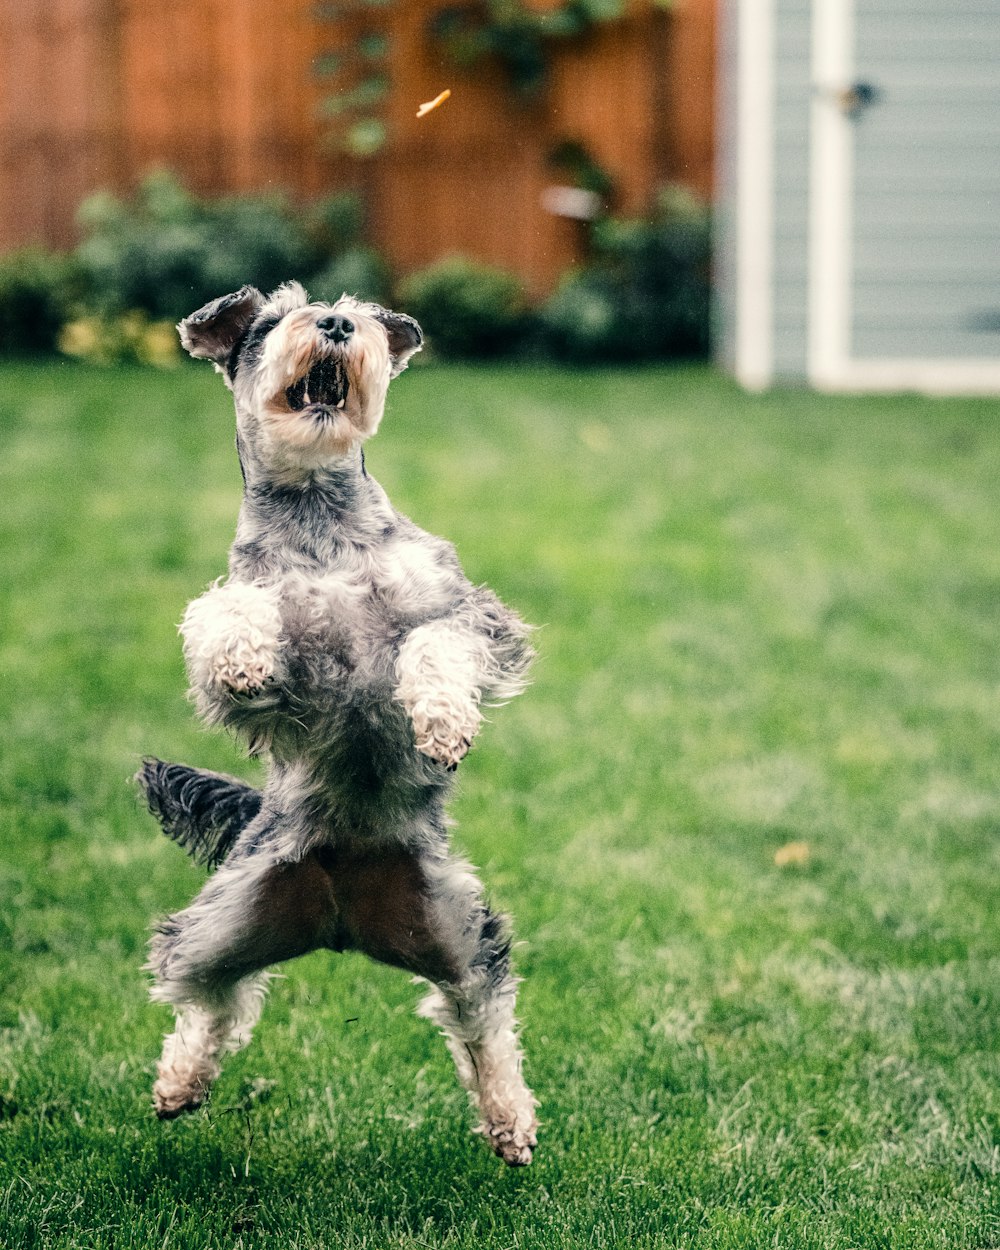 grey and white miniature schnauzer running on green grass field during daytime, dog jumping, dog behavior